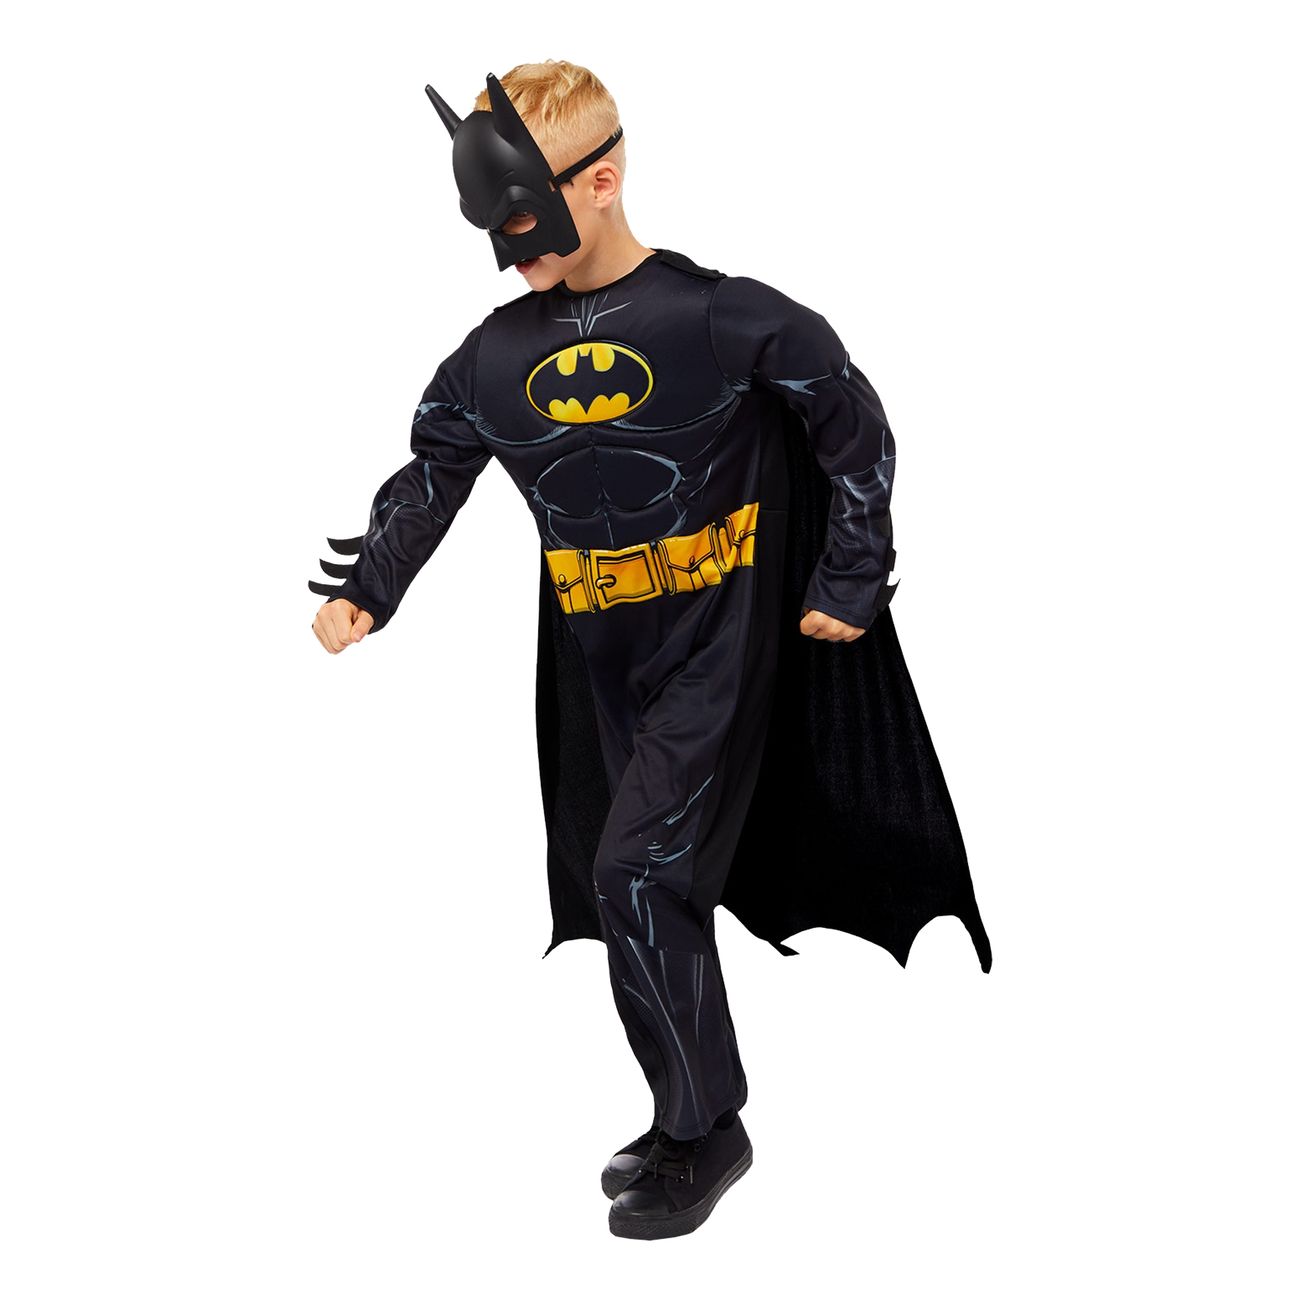 batman-comic-barn-maskeradddrakt-98186-2